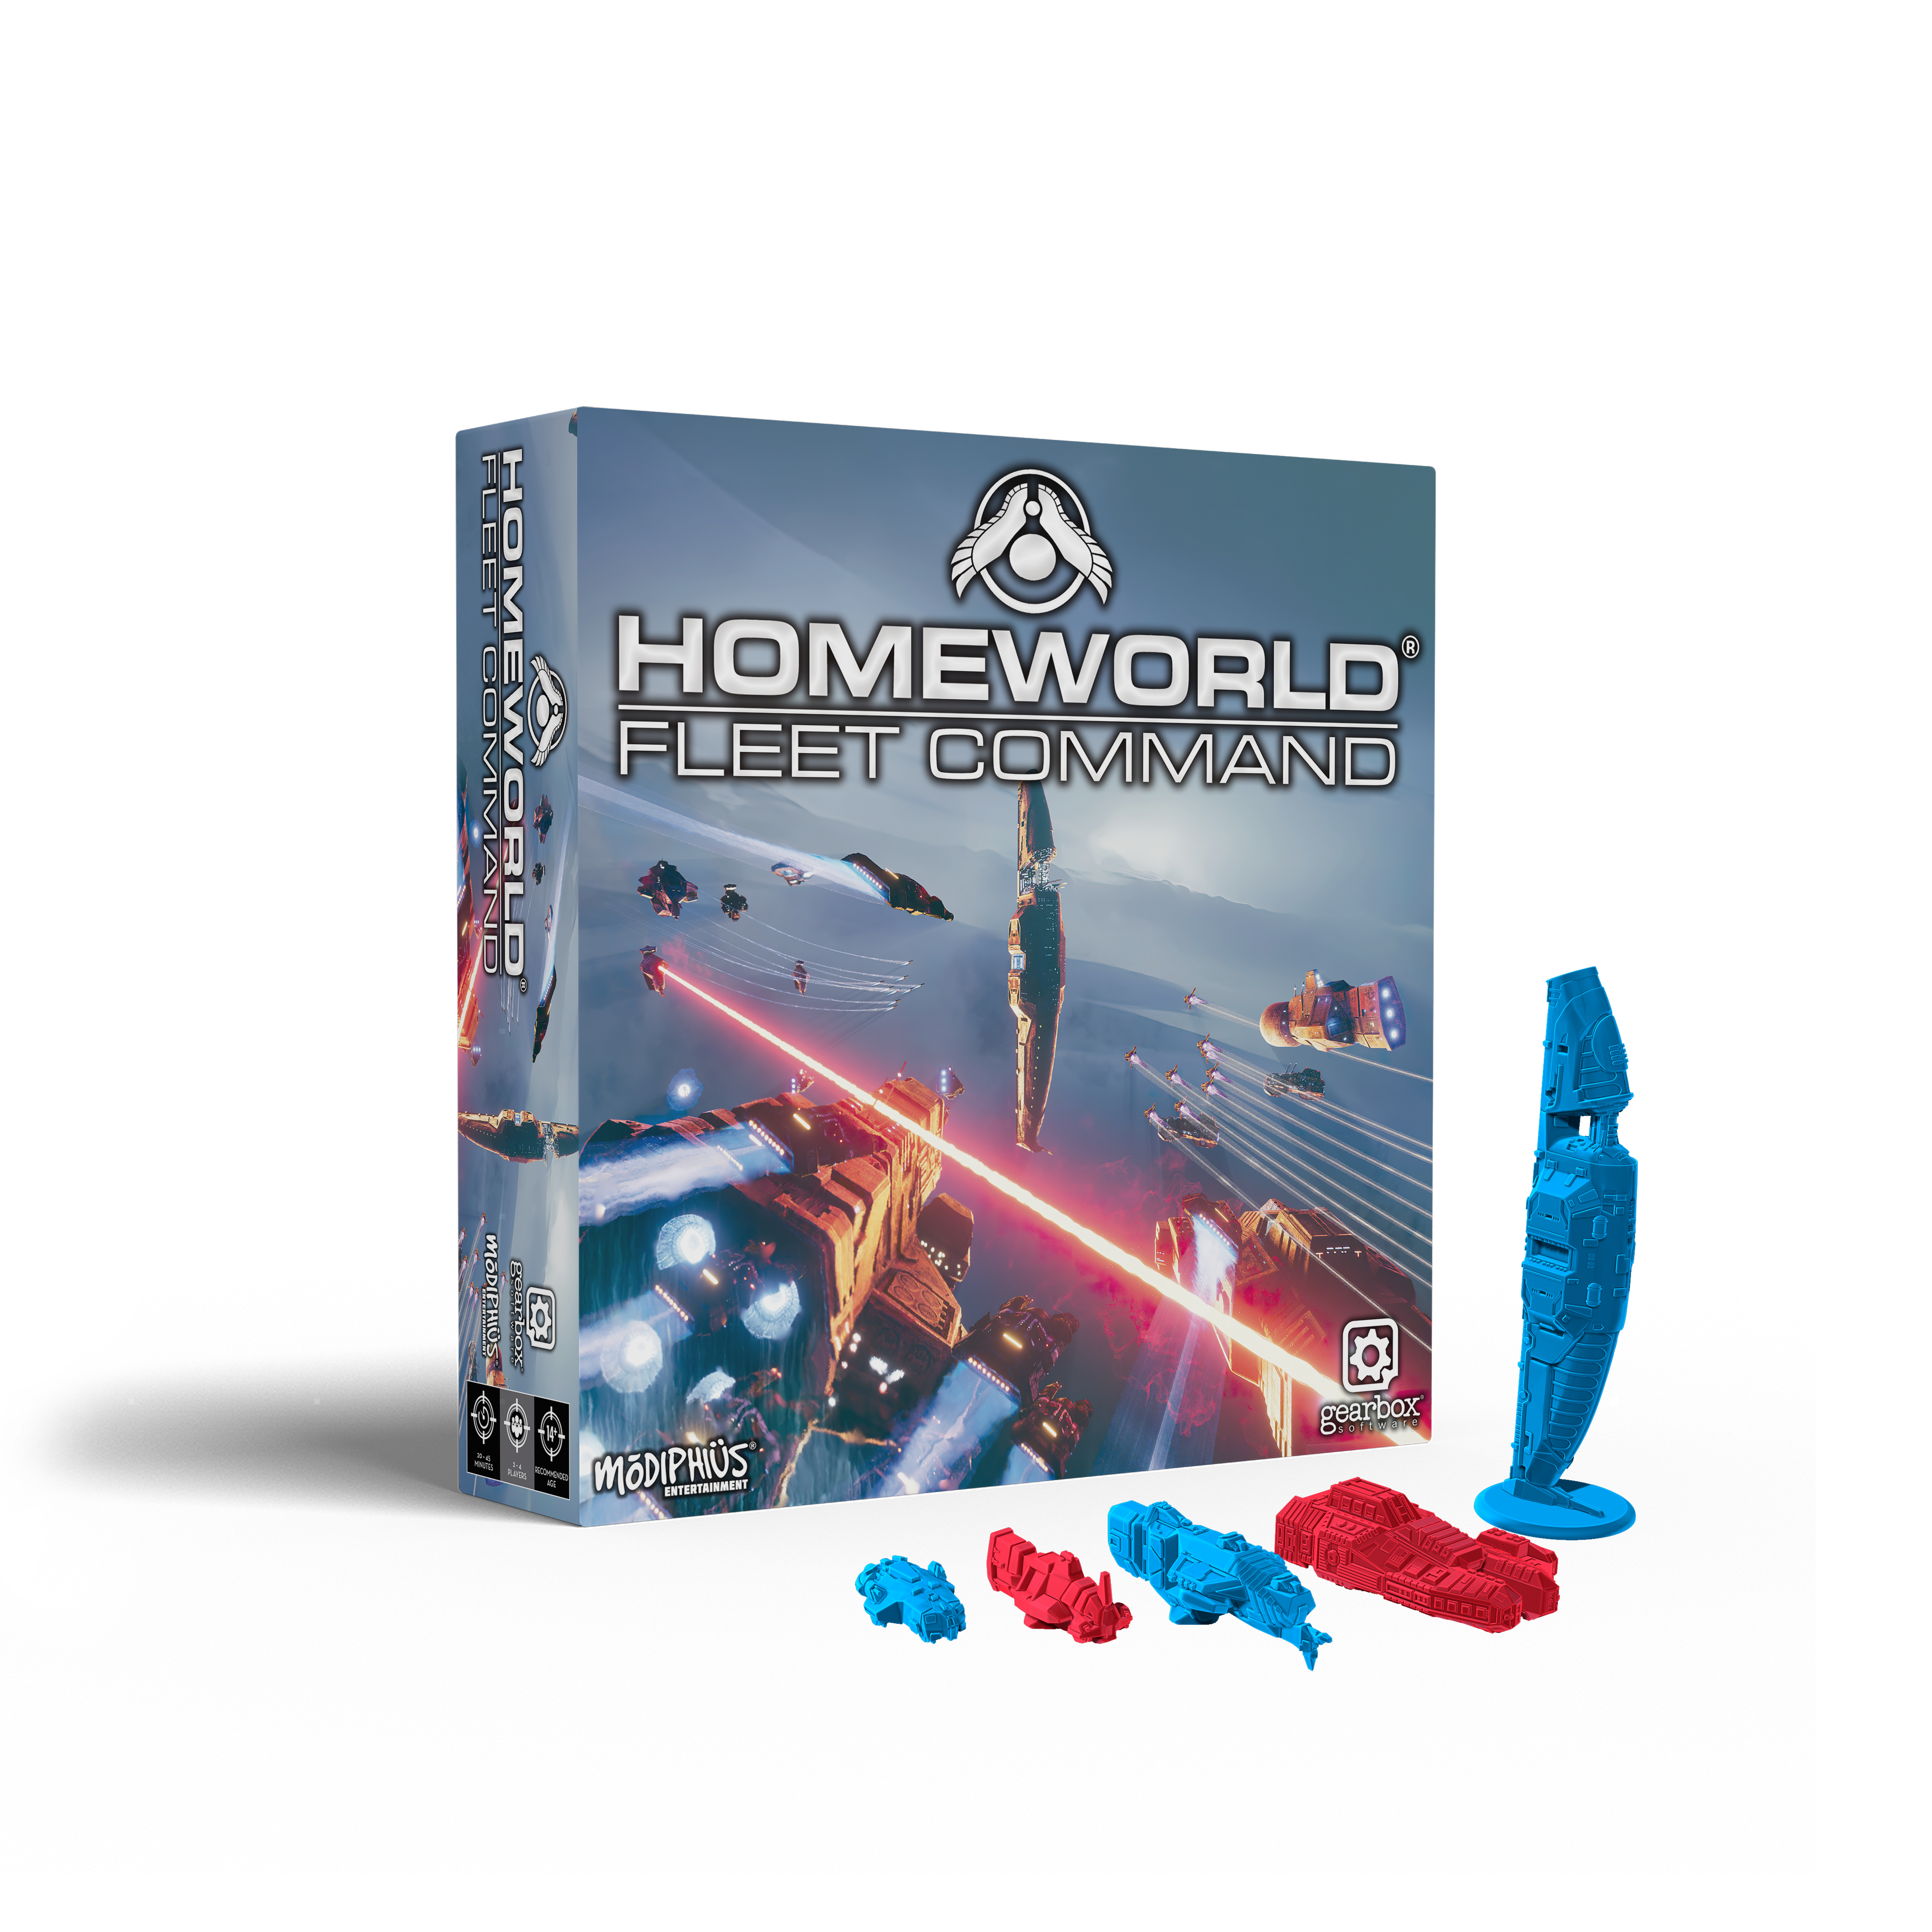 Homeworld Fleet Command box and minis